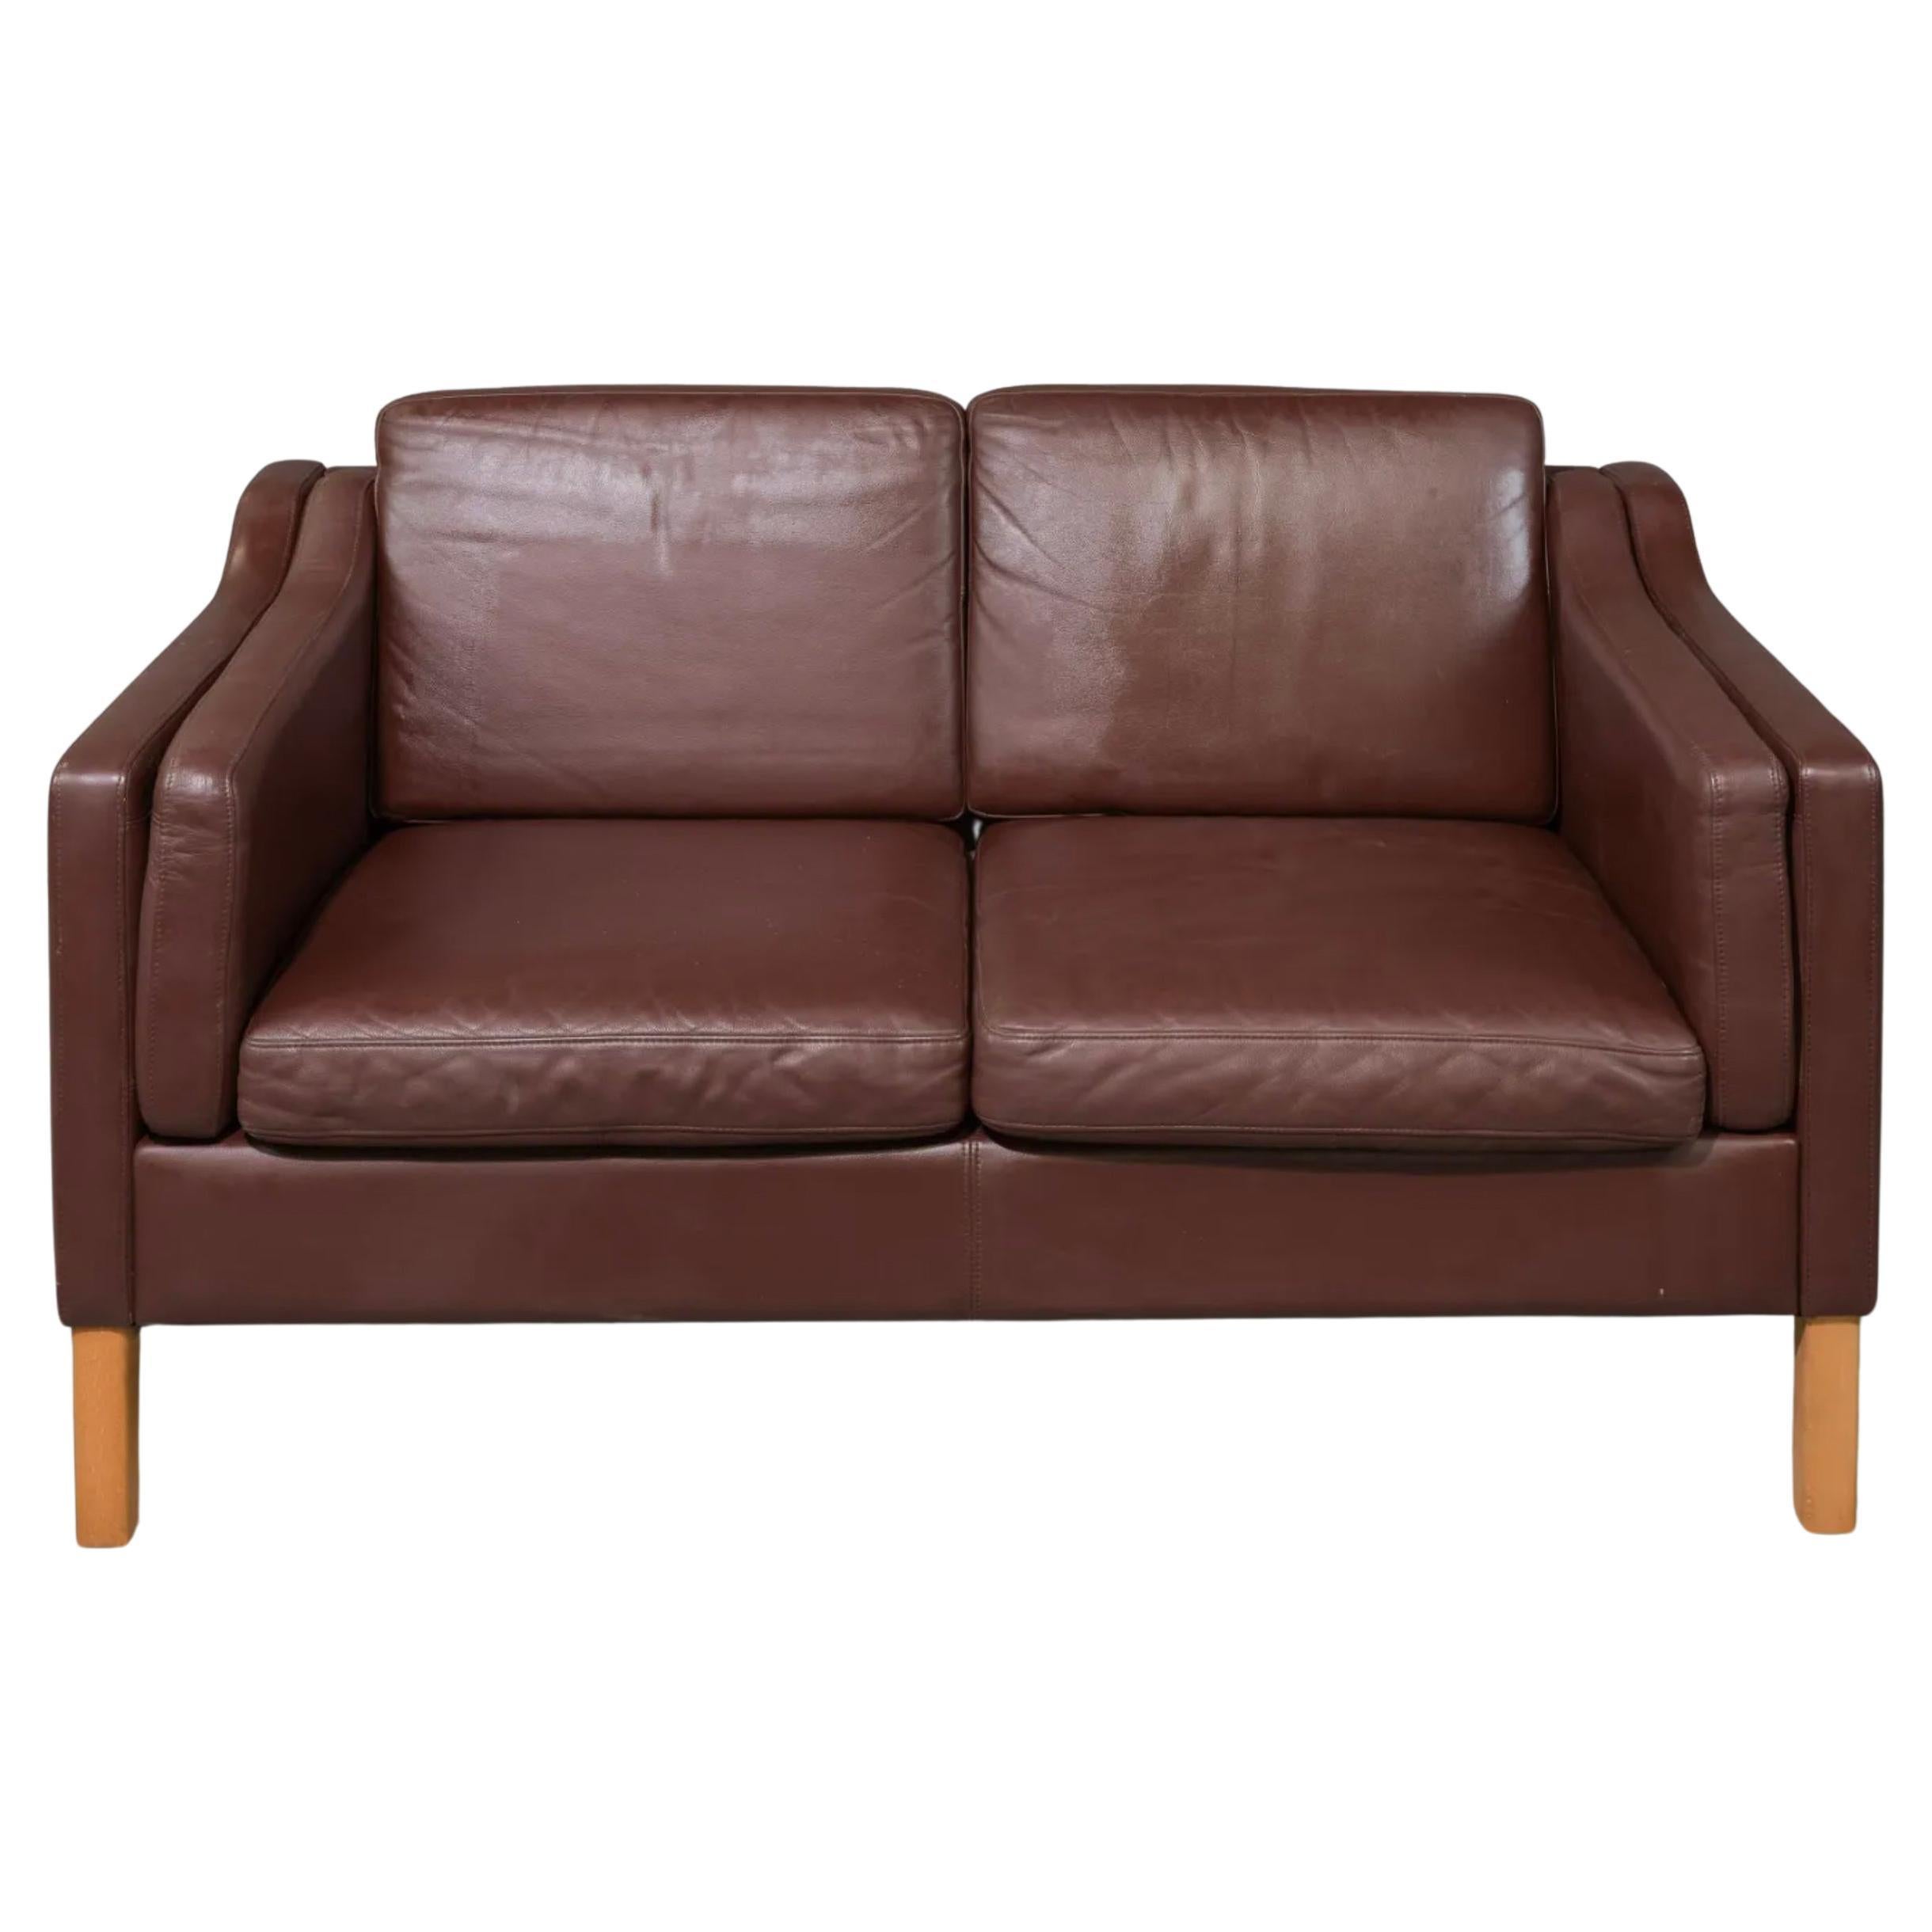 Danish modern brown leather 2 seat sofa with birch legs style of Børge Mogensen